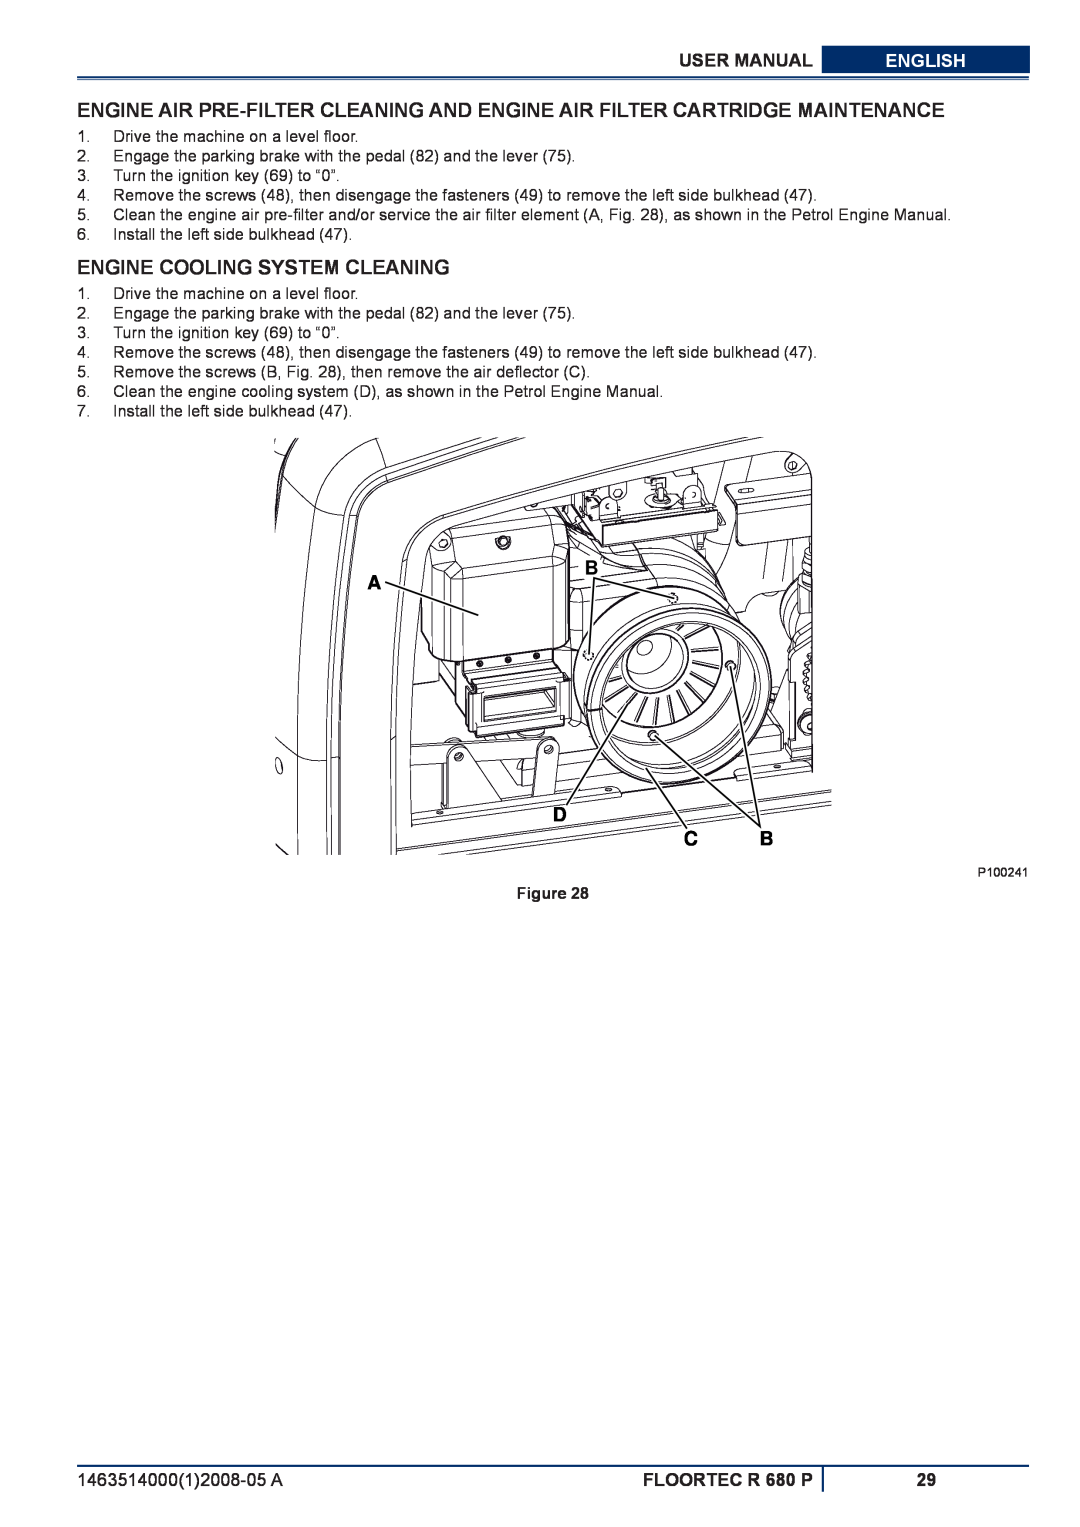 Nilfisk-ALTO manuel dutilisation Engine Cooling System Cleaning, D C B, User Manual, English, FLOORTEC R 680 P, Figure 